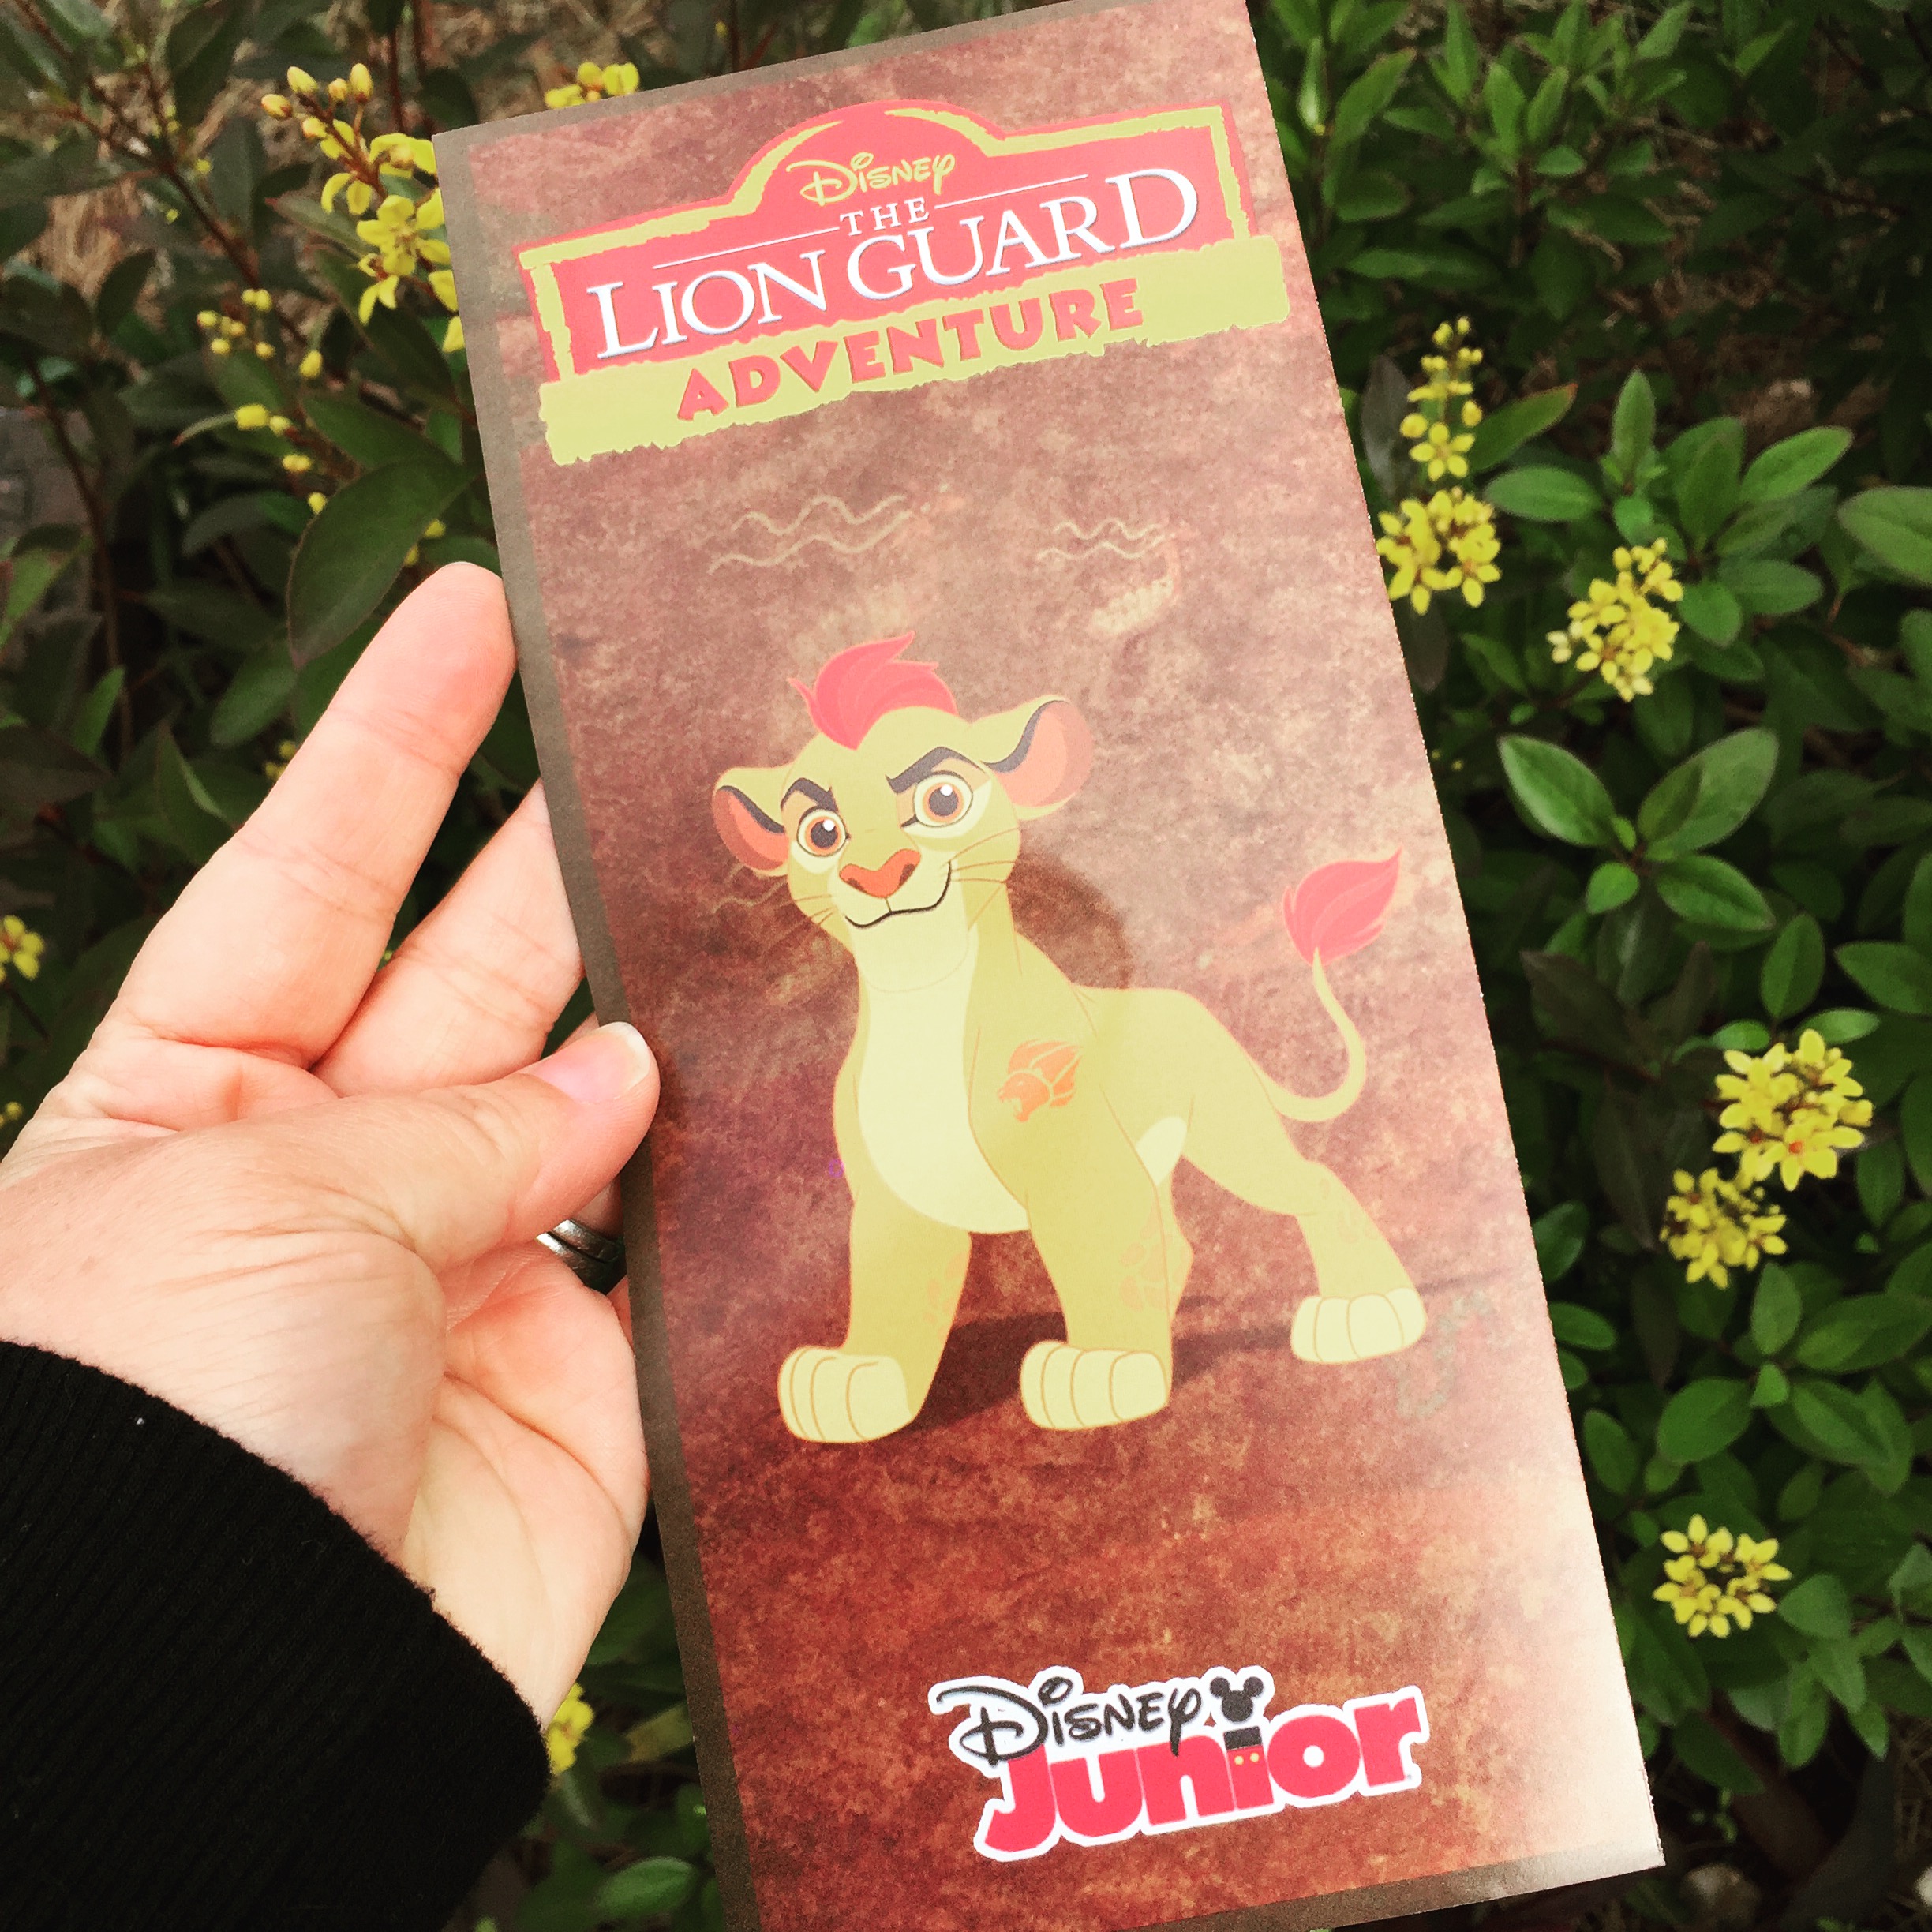 The Lion Guard Adventure Disney's Animal Kingdom